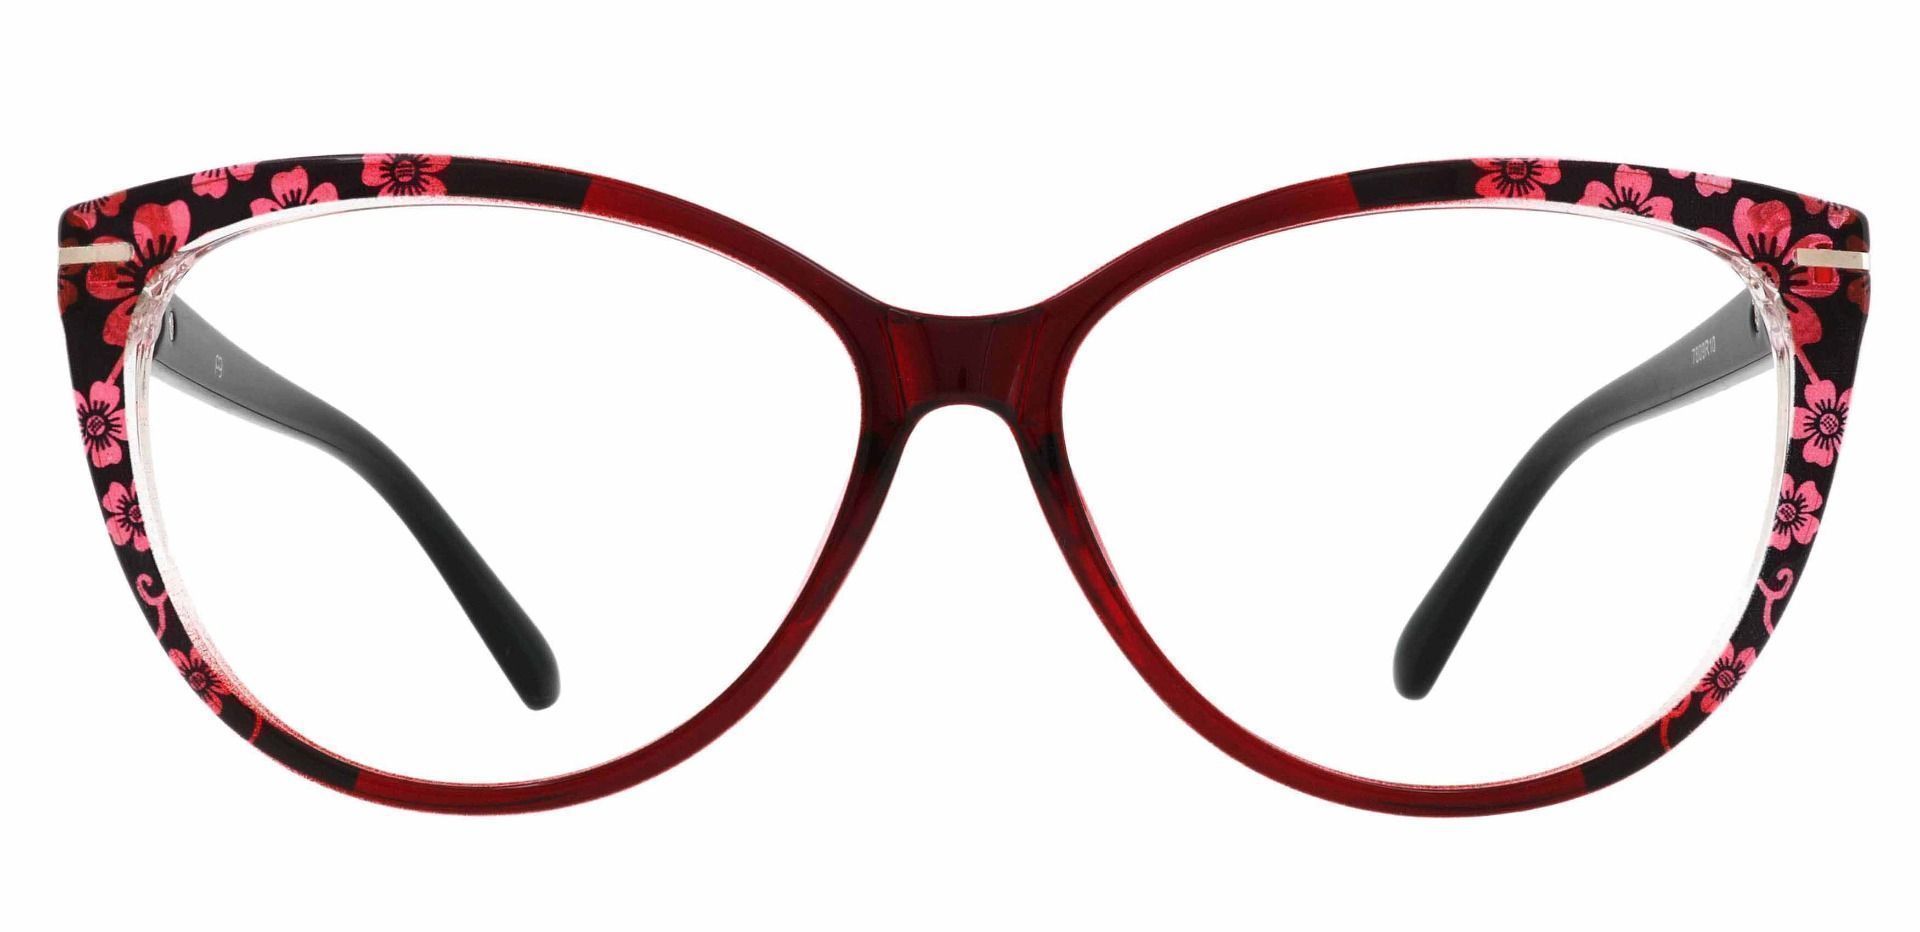 Maggie Cat Eye Prescription Glasses - Wine Floral Accents